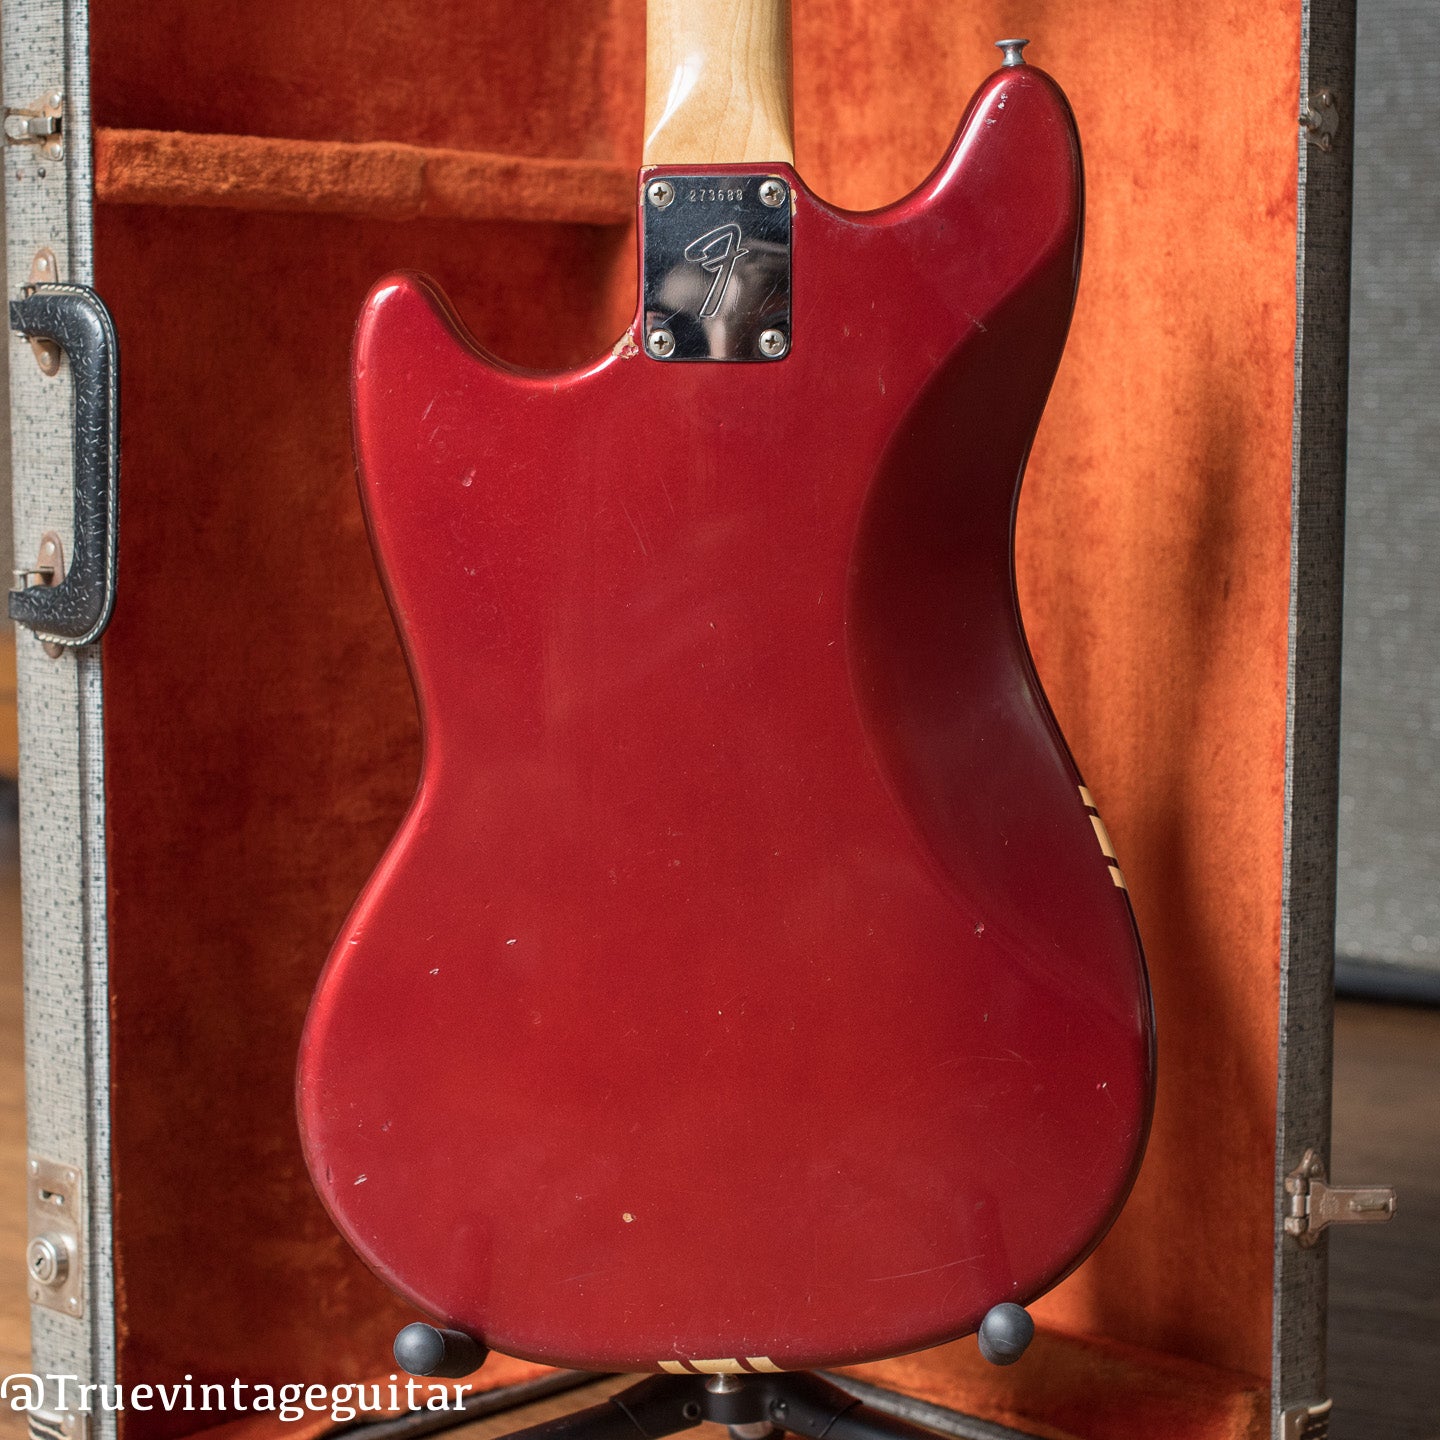 Vintage Fender Mustang red electric guitar 1969